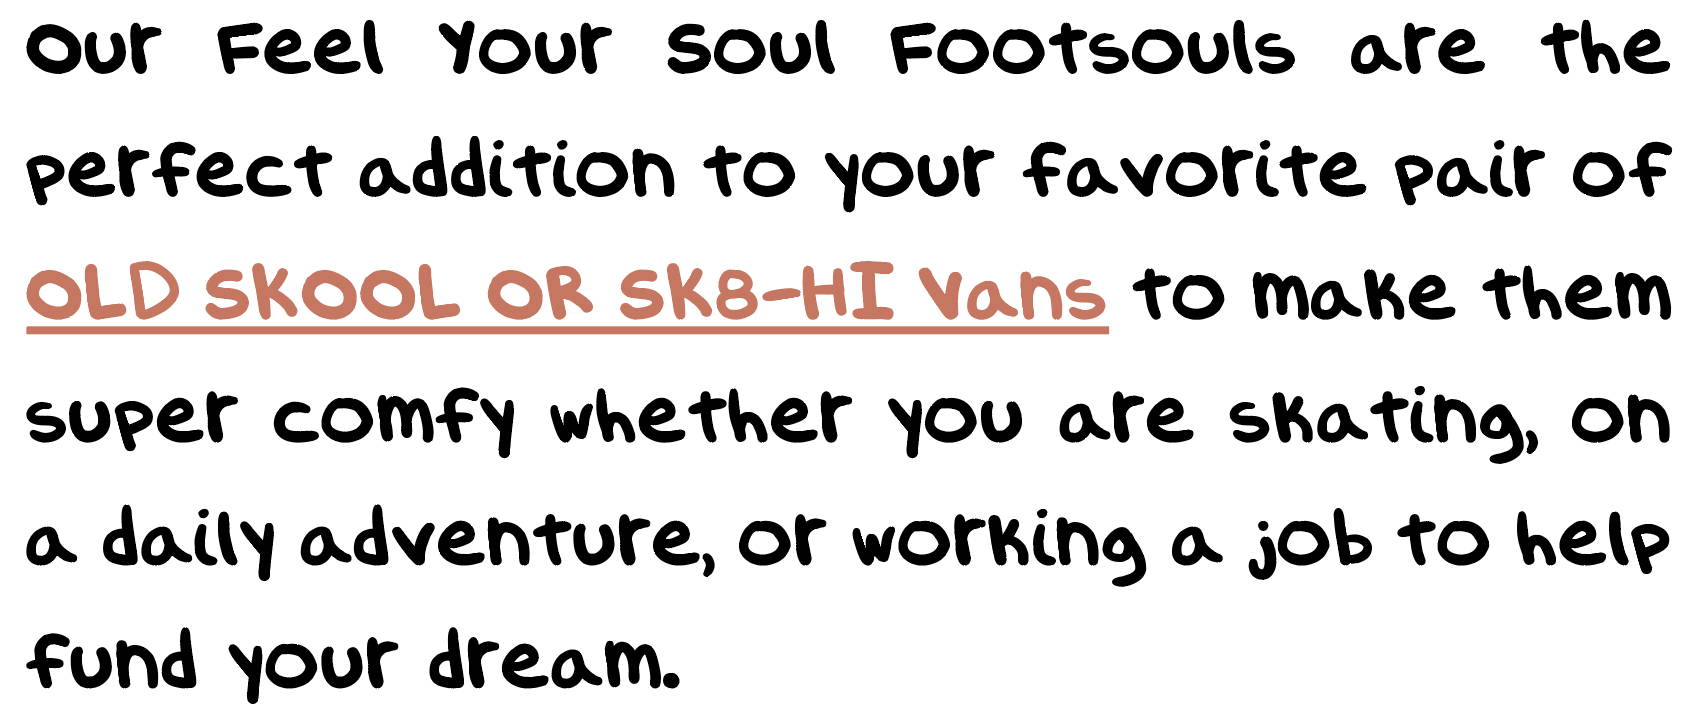 feel your soul footsouls for vans